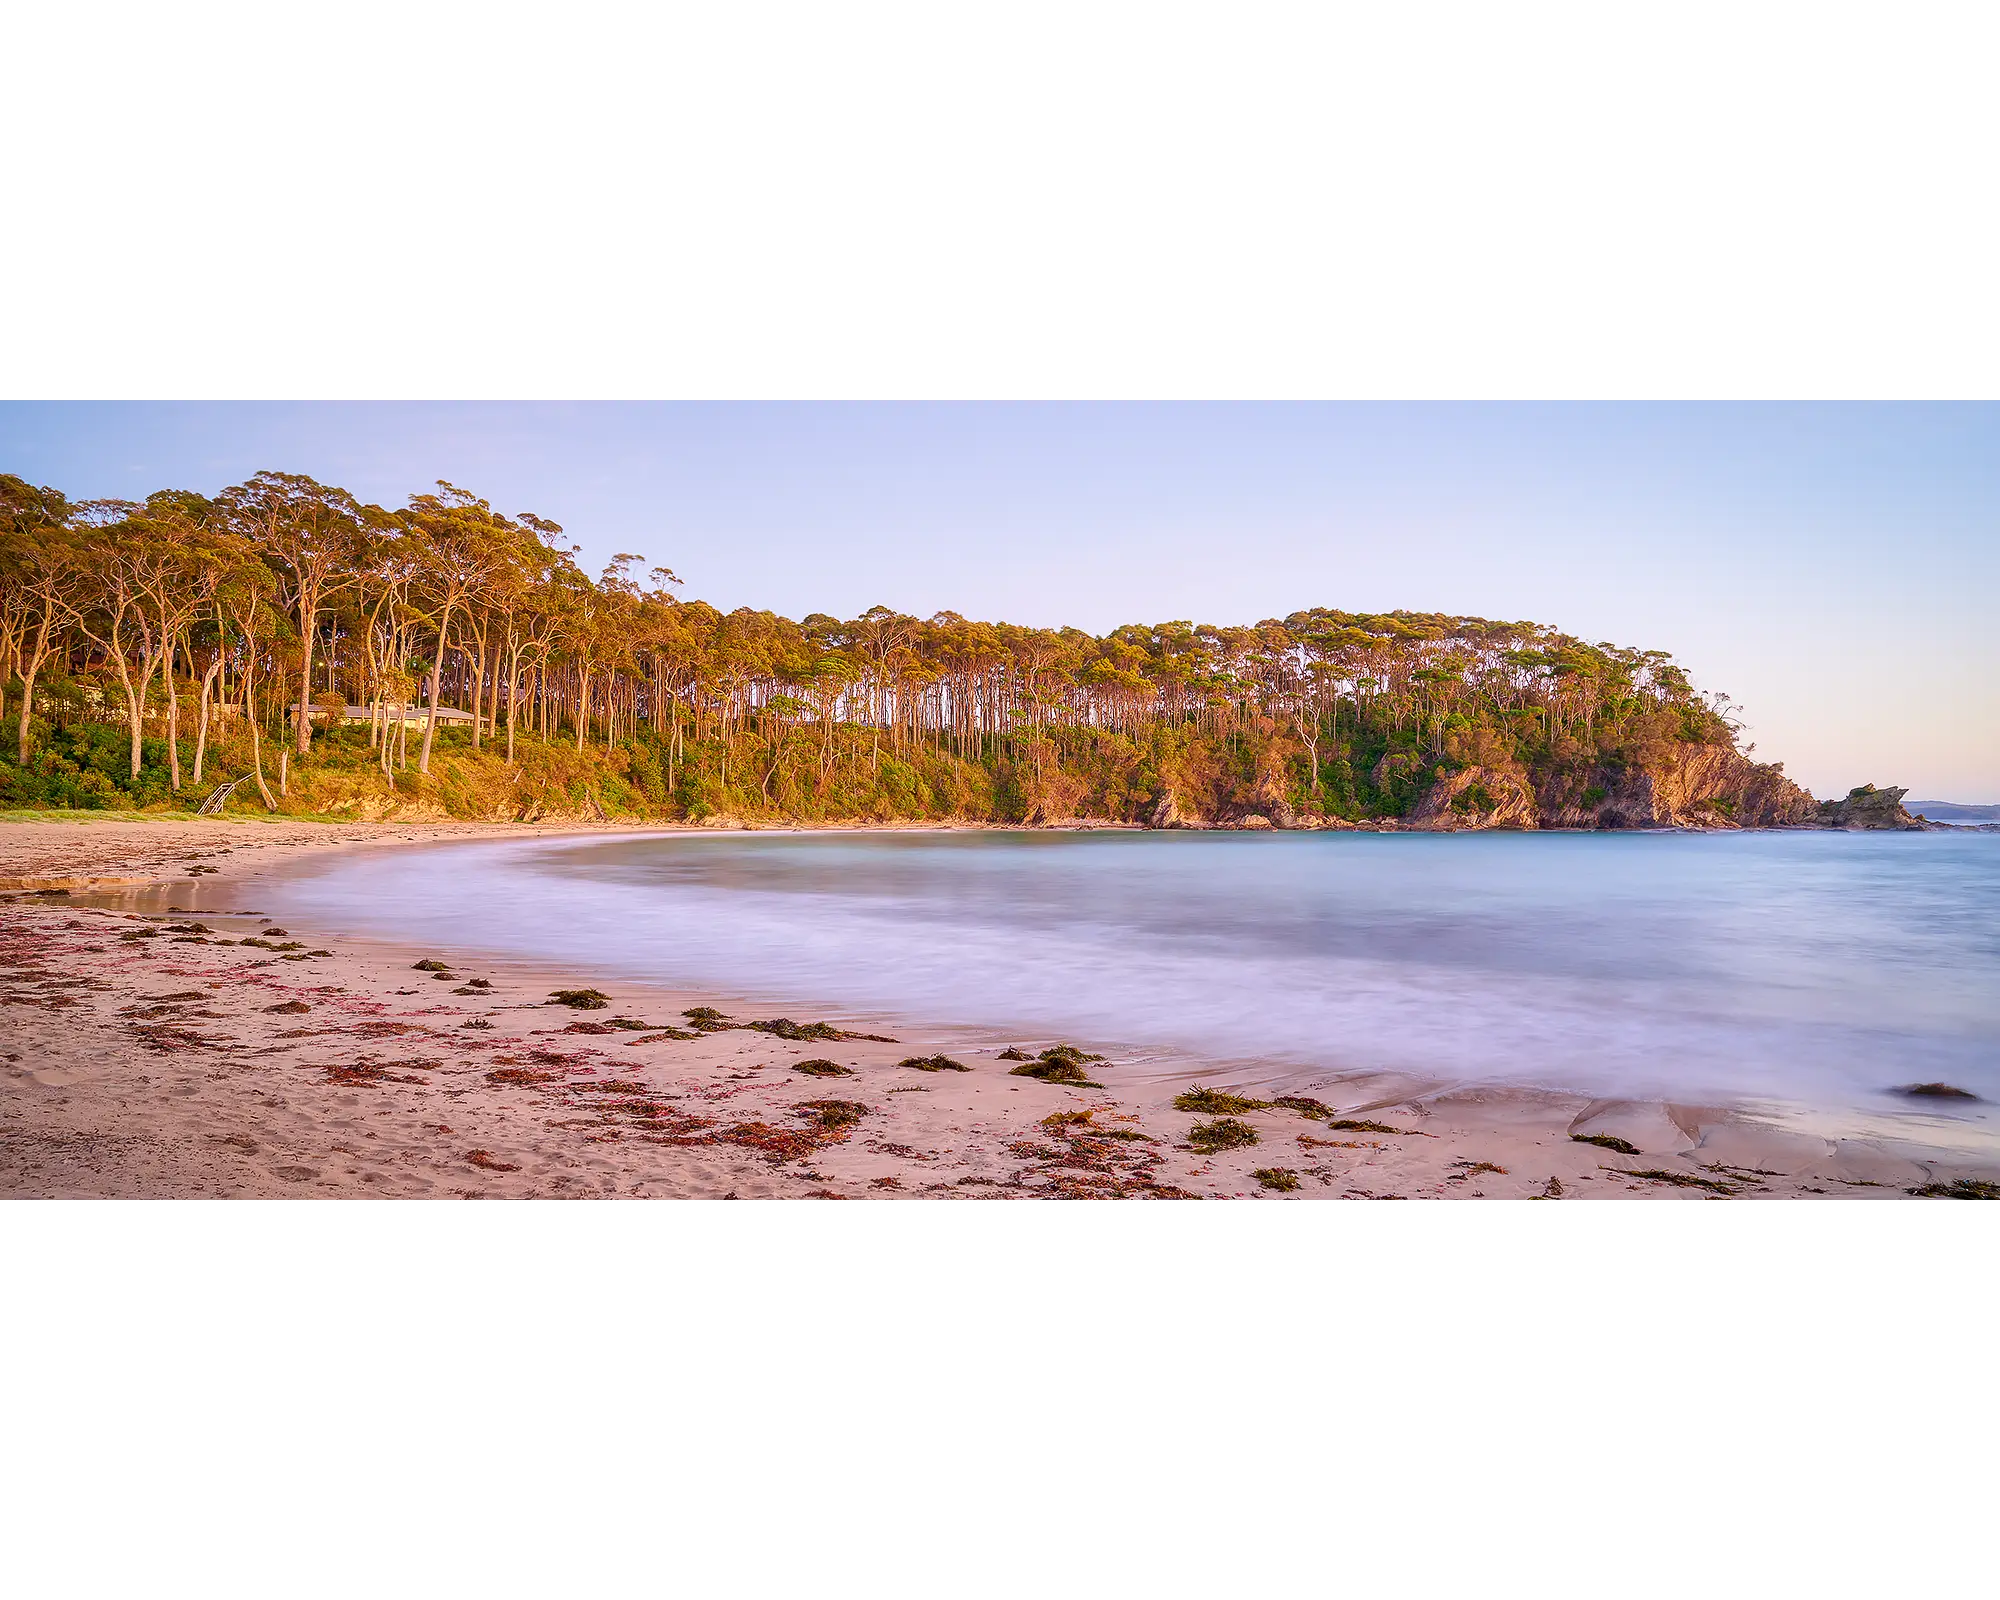 Lilli Pilli Beach at dawn, Batemans Bay, South Coast of New South Wales.